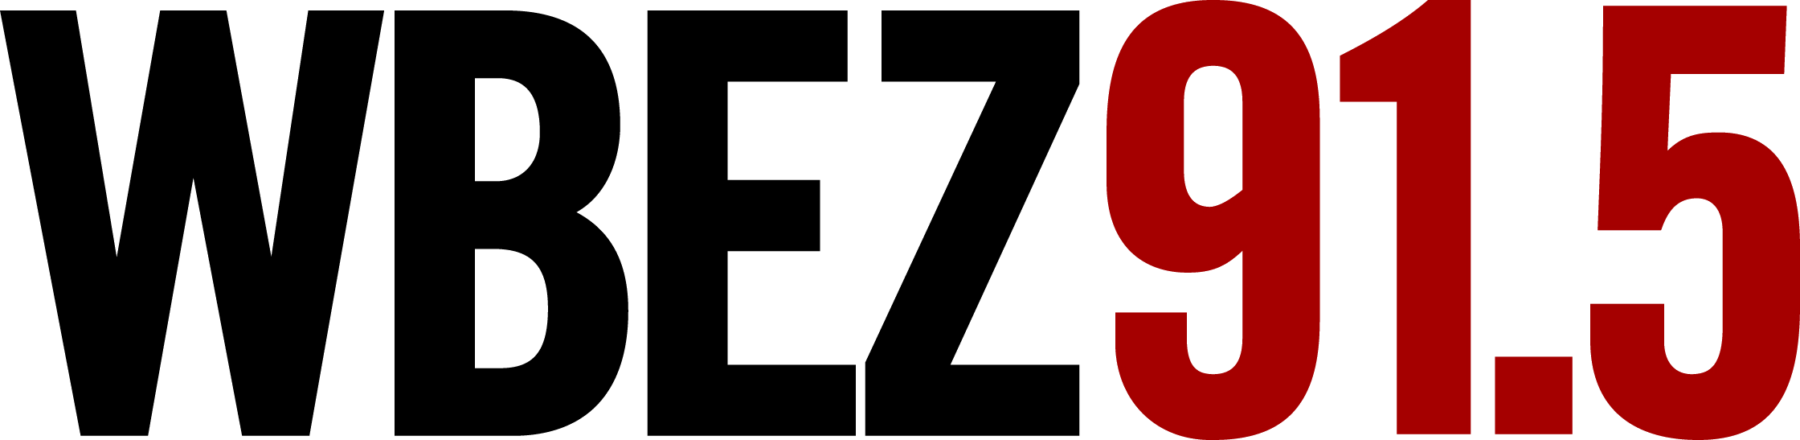 WBEZ91.5 logo